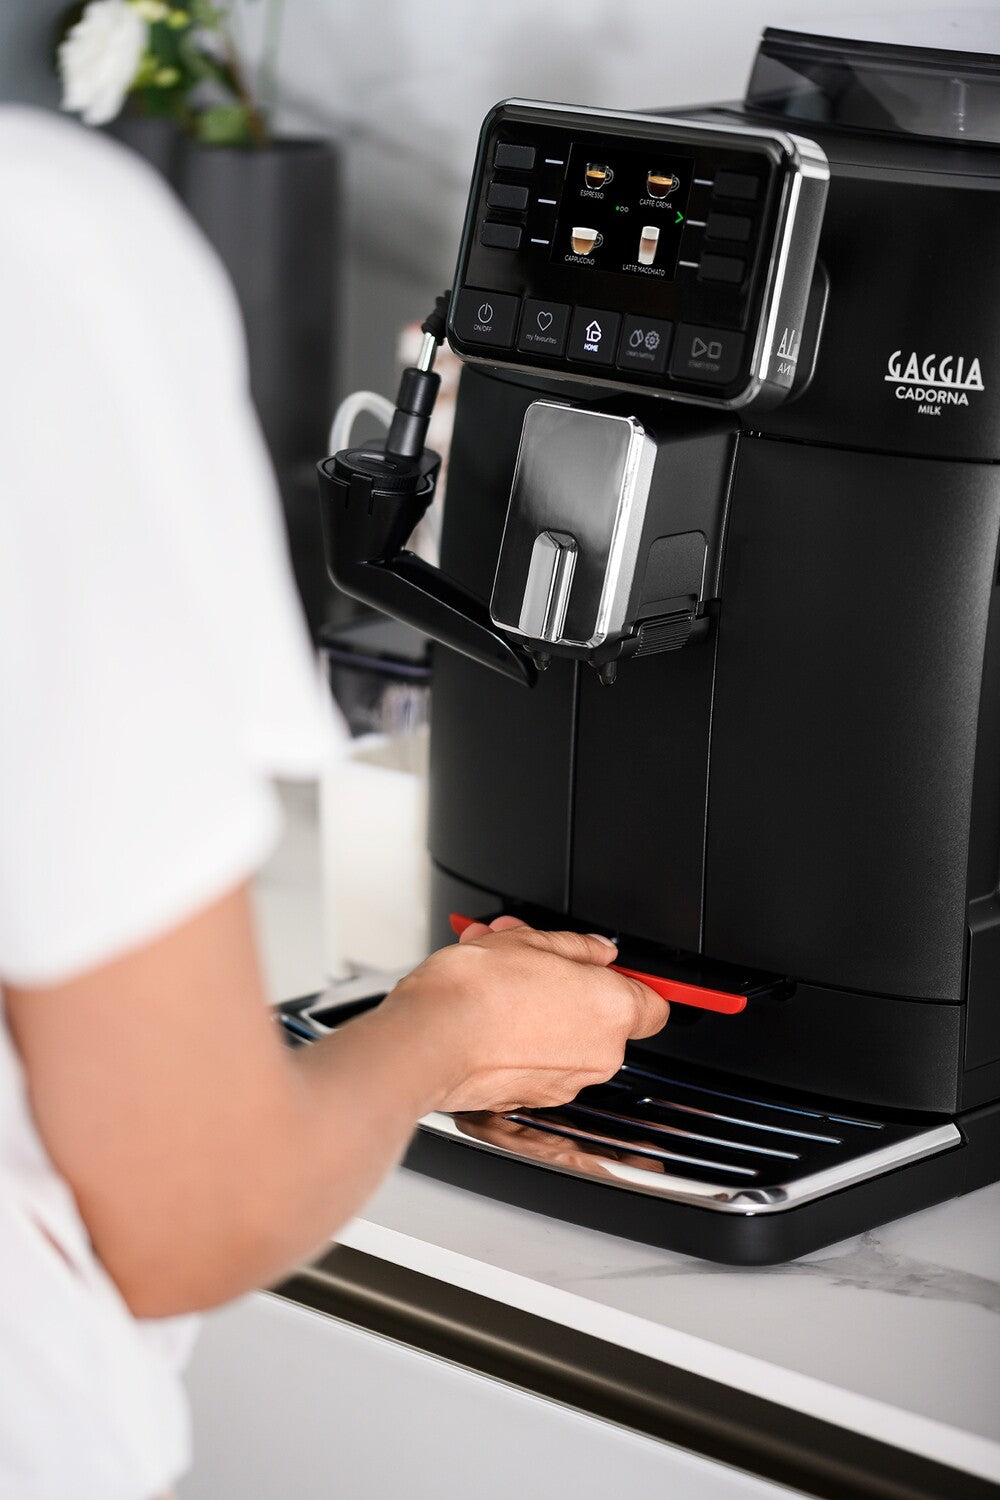 Gaggia Cadorna MILK- Black Bean to Cup Coffee Machine